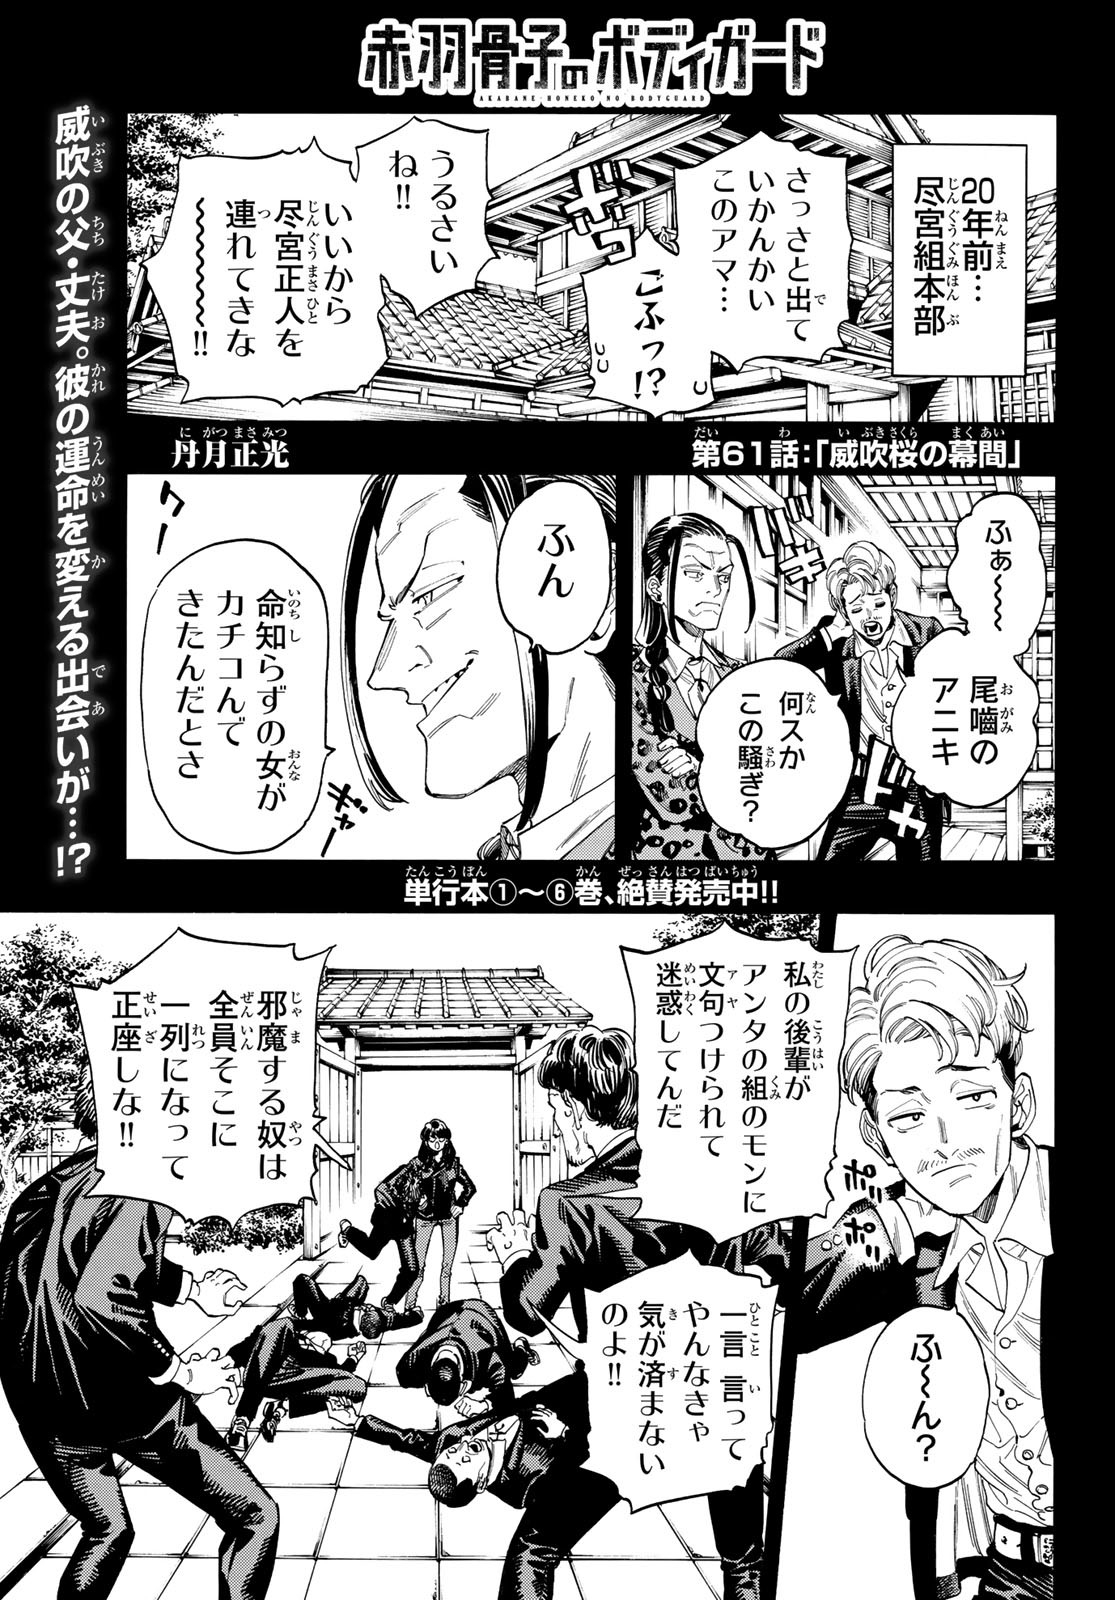 Akabane Honeko no Bodyguard - Chapter 61 - Page 1